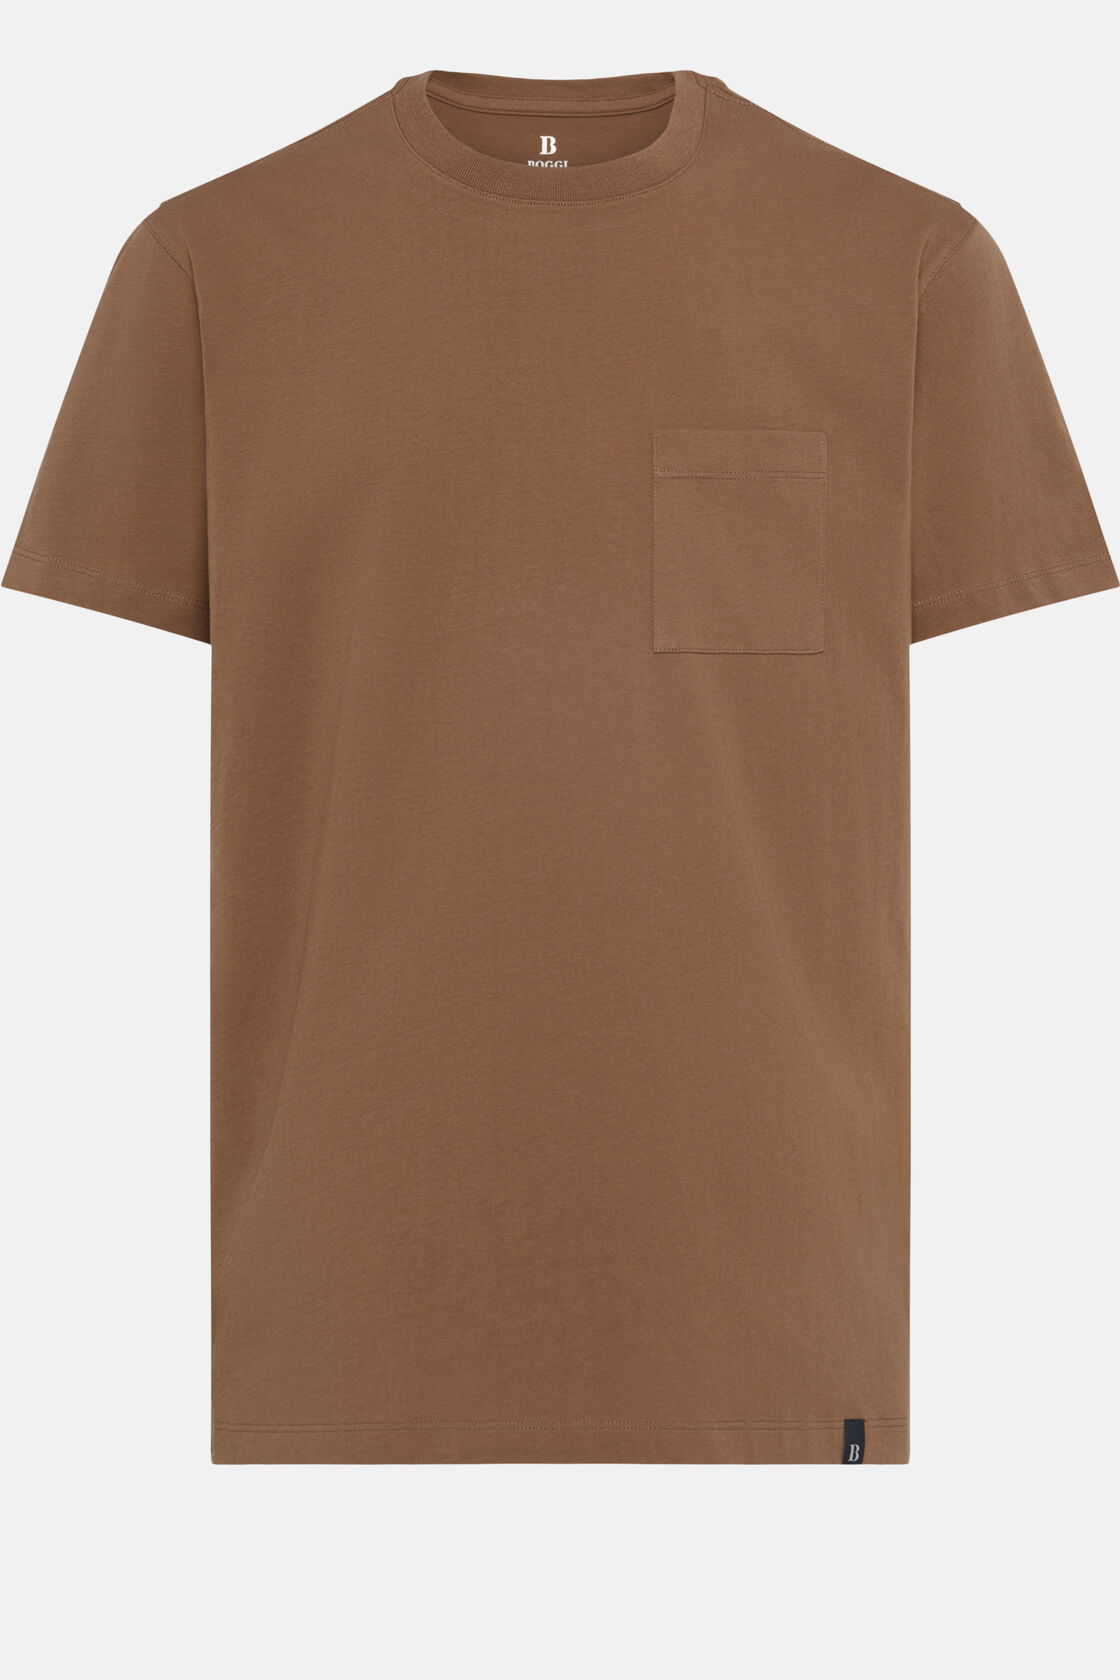 Ss Australian Cotton Jersey T Shirt, Brown, hi-res